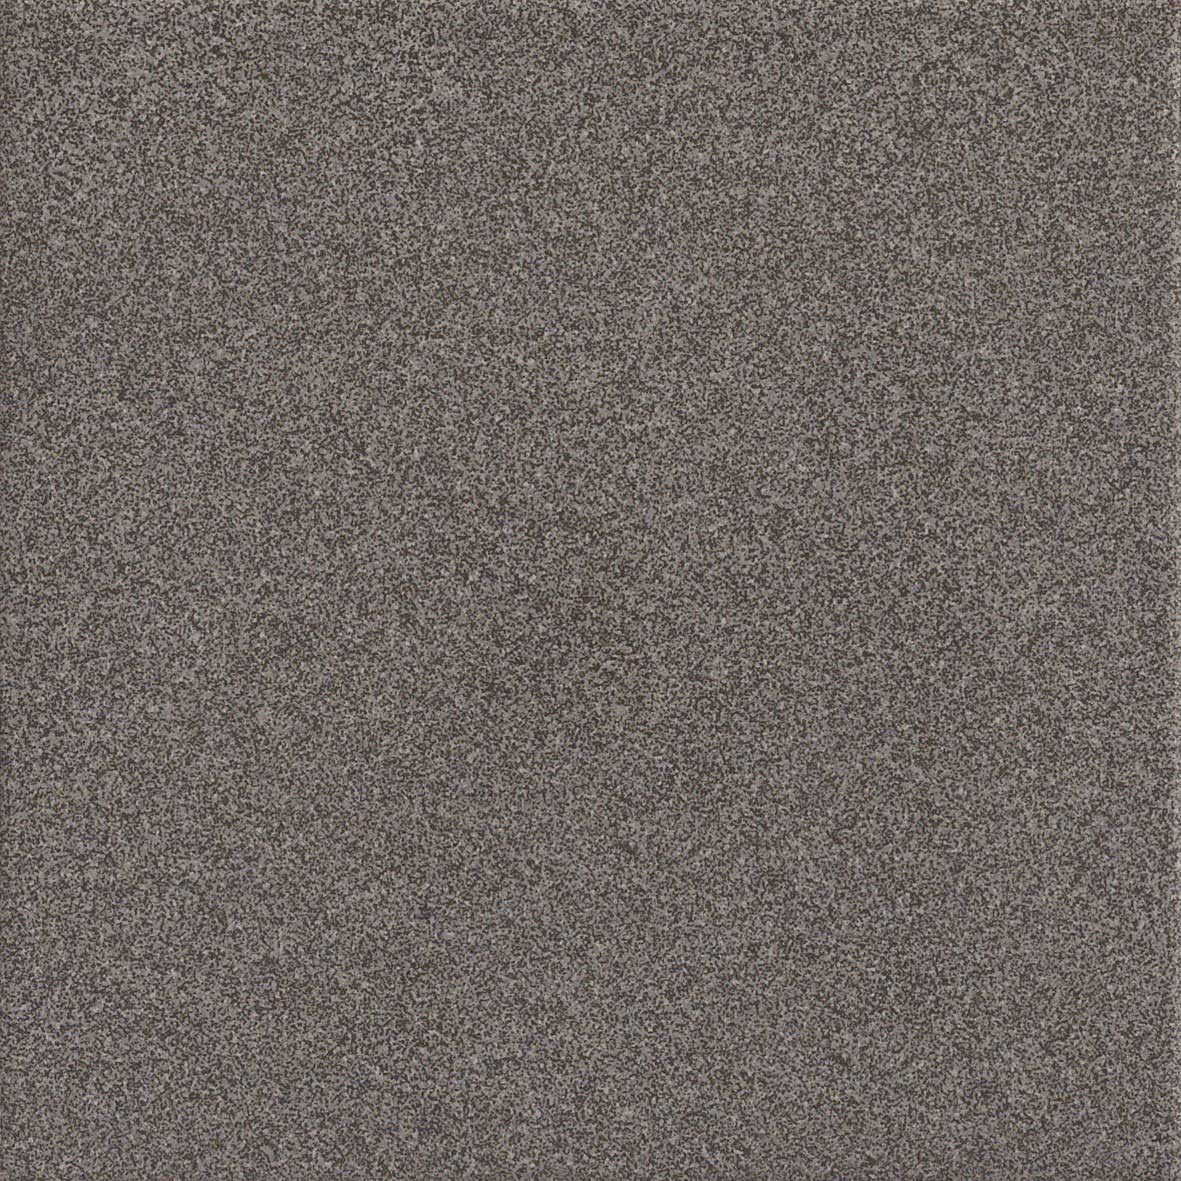 Керамогранит Плитка из керамогранита Marazzi Italy Sistem T Graniti 20x20 серый (MRU4) / коллекция Marazzi Italy / производитель Marazzi Italy / страна Италия